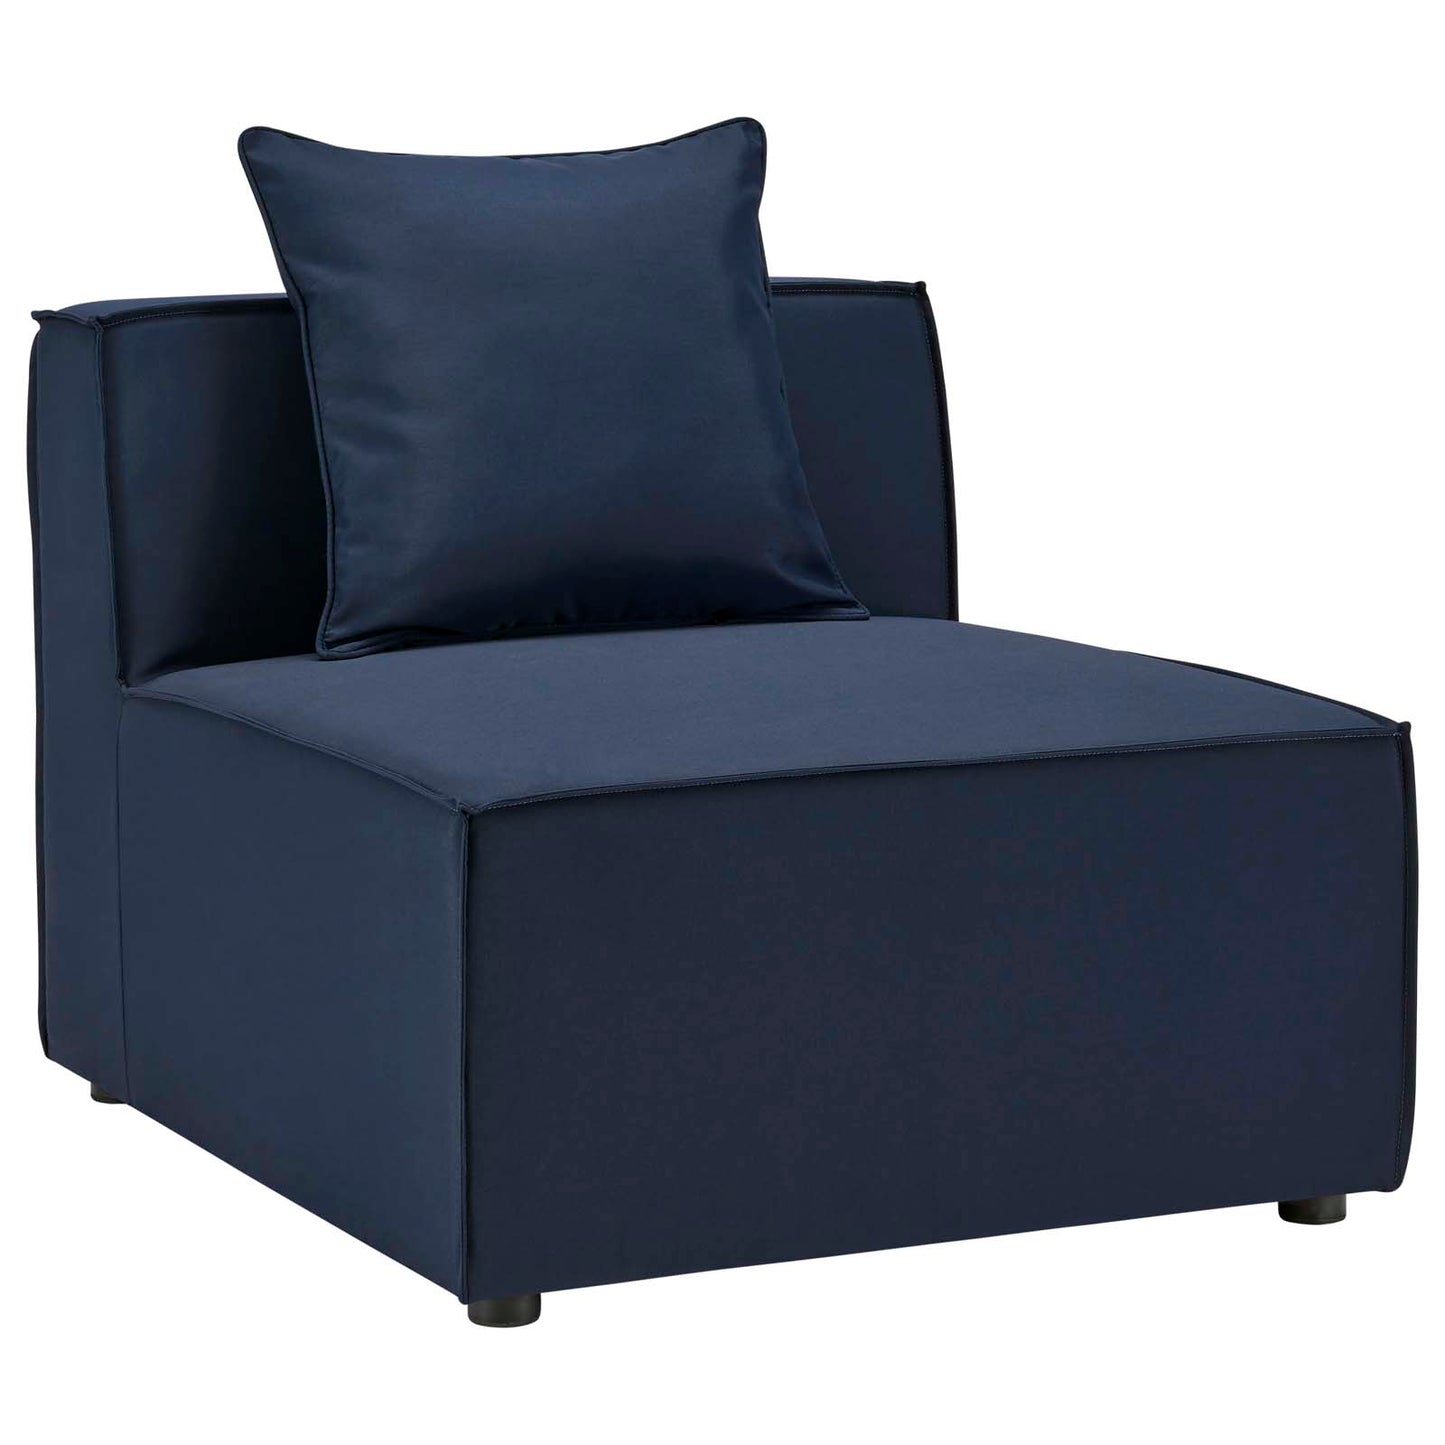 Saybrook Outdoor Patio Upholstered 6-Piece Sectional Sofa Navy EEI-4386-NAV